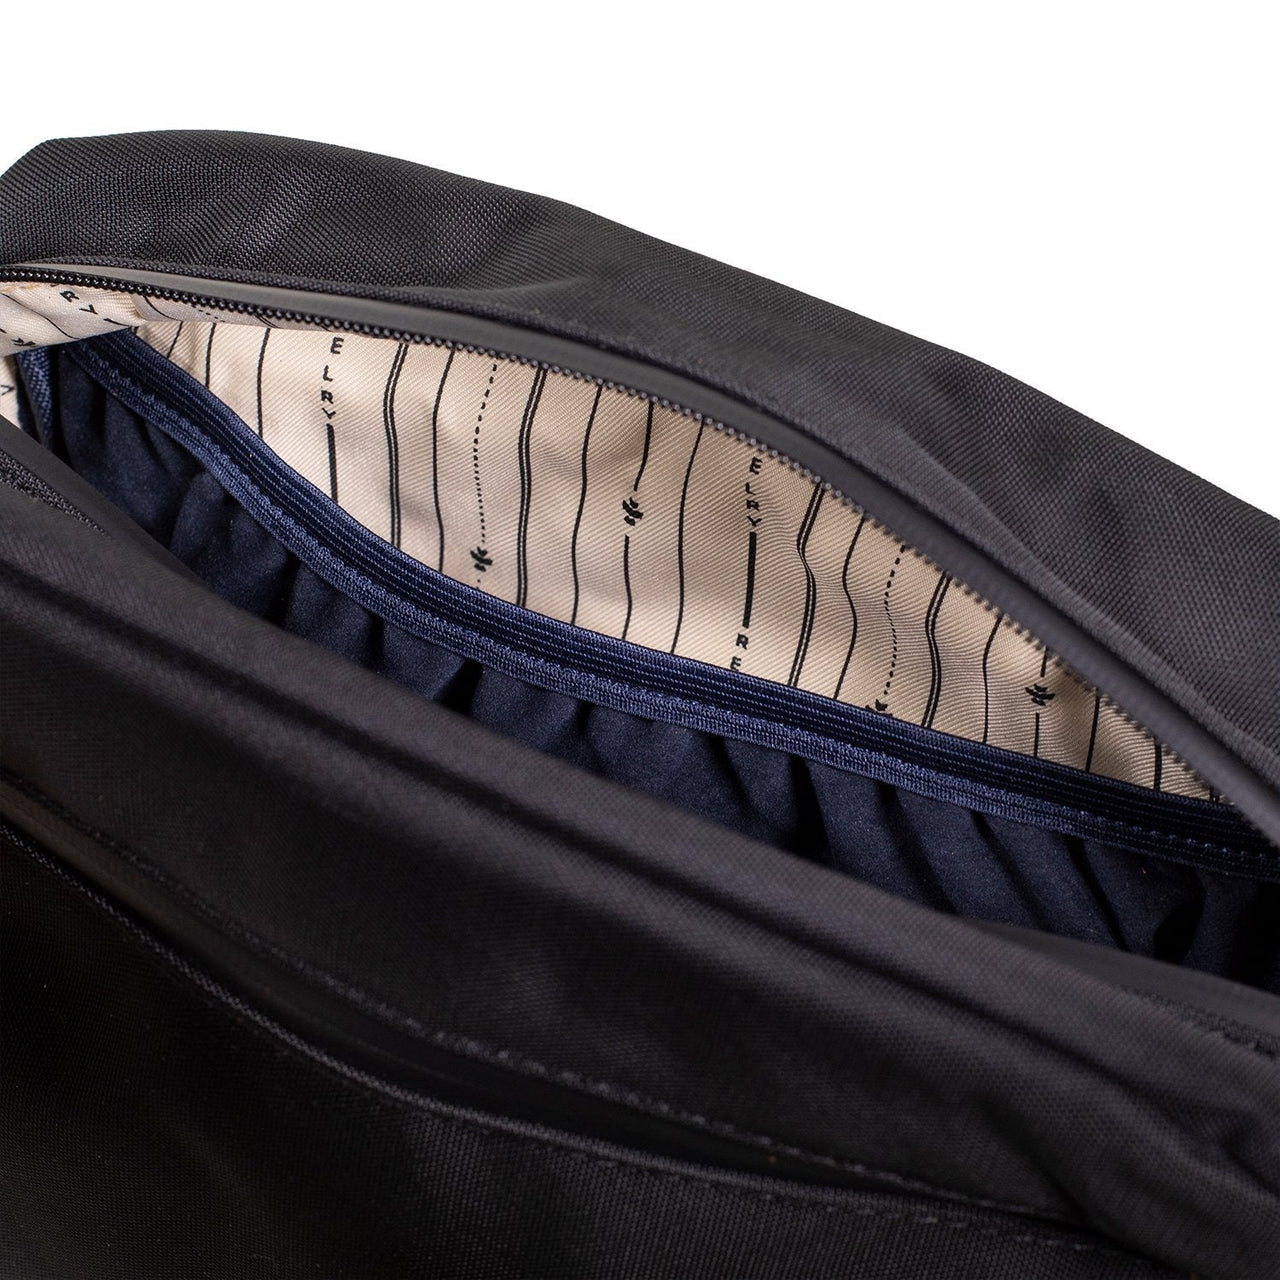 Revelry Smoke Black Stowaway Stash Bag | Bags & Cases | 420 Science